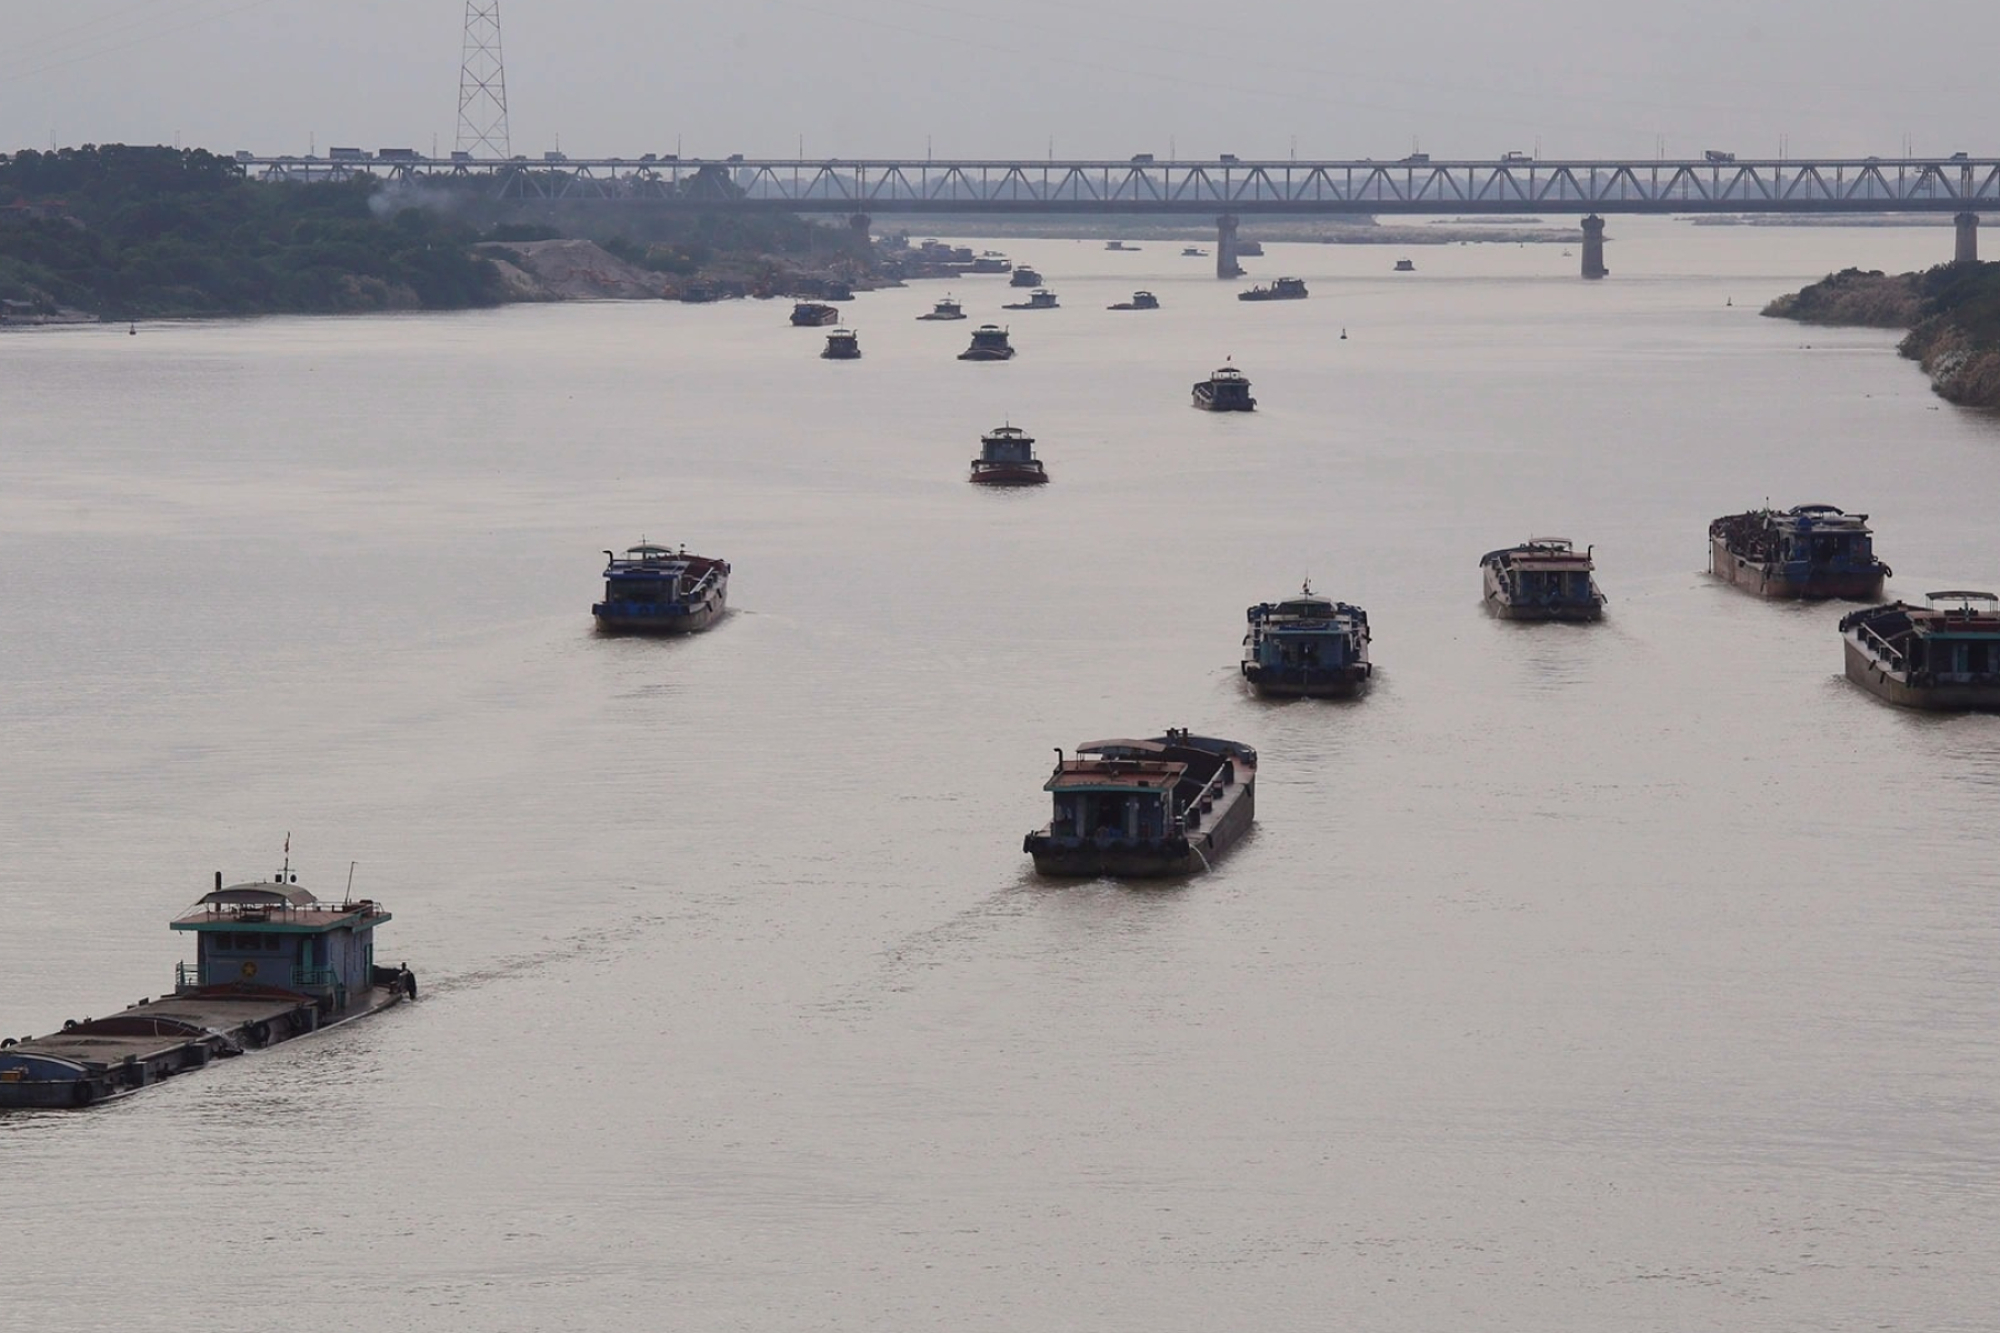 Boats like looms, Red river winding, Hanoi breaking news, Latest world news updates, 2000x1340 HD Desktop